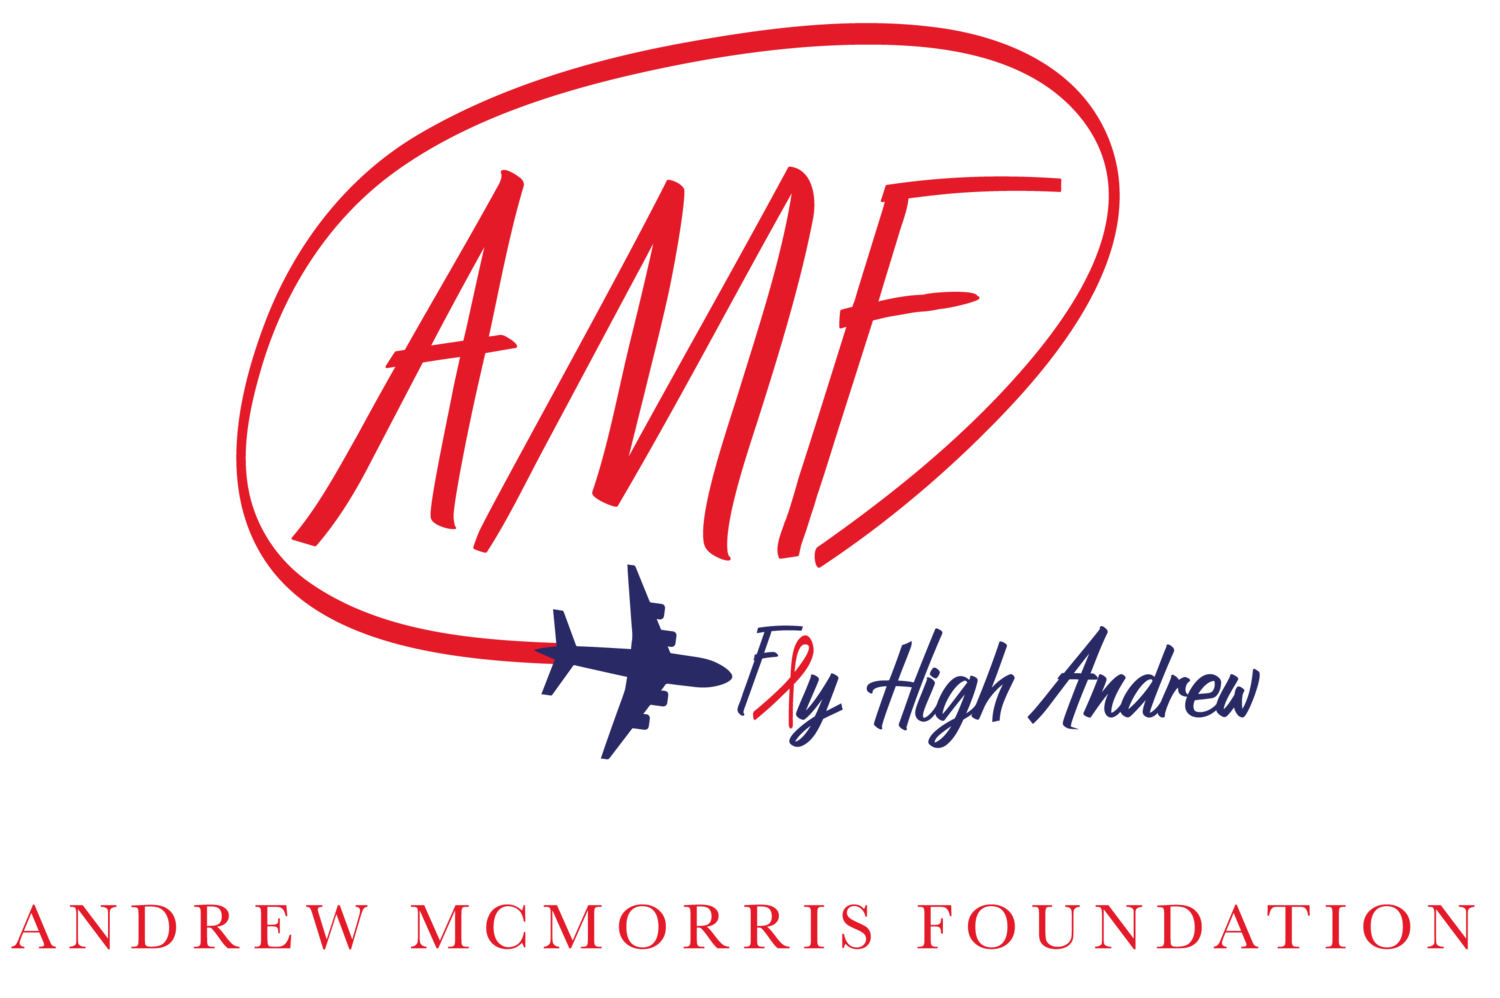 Andrew McMorris Foundation